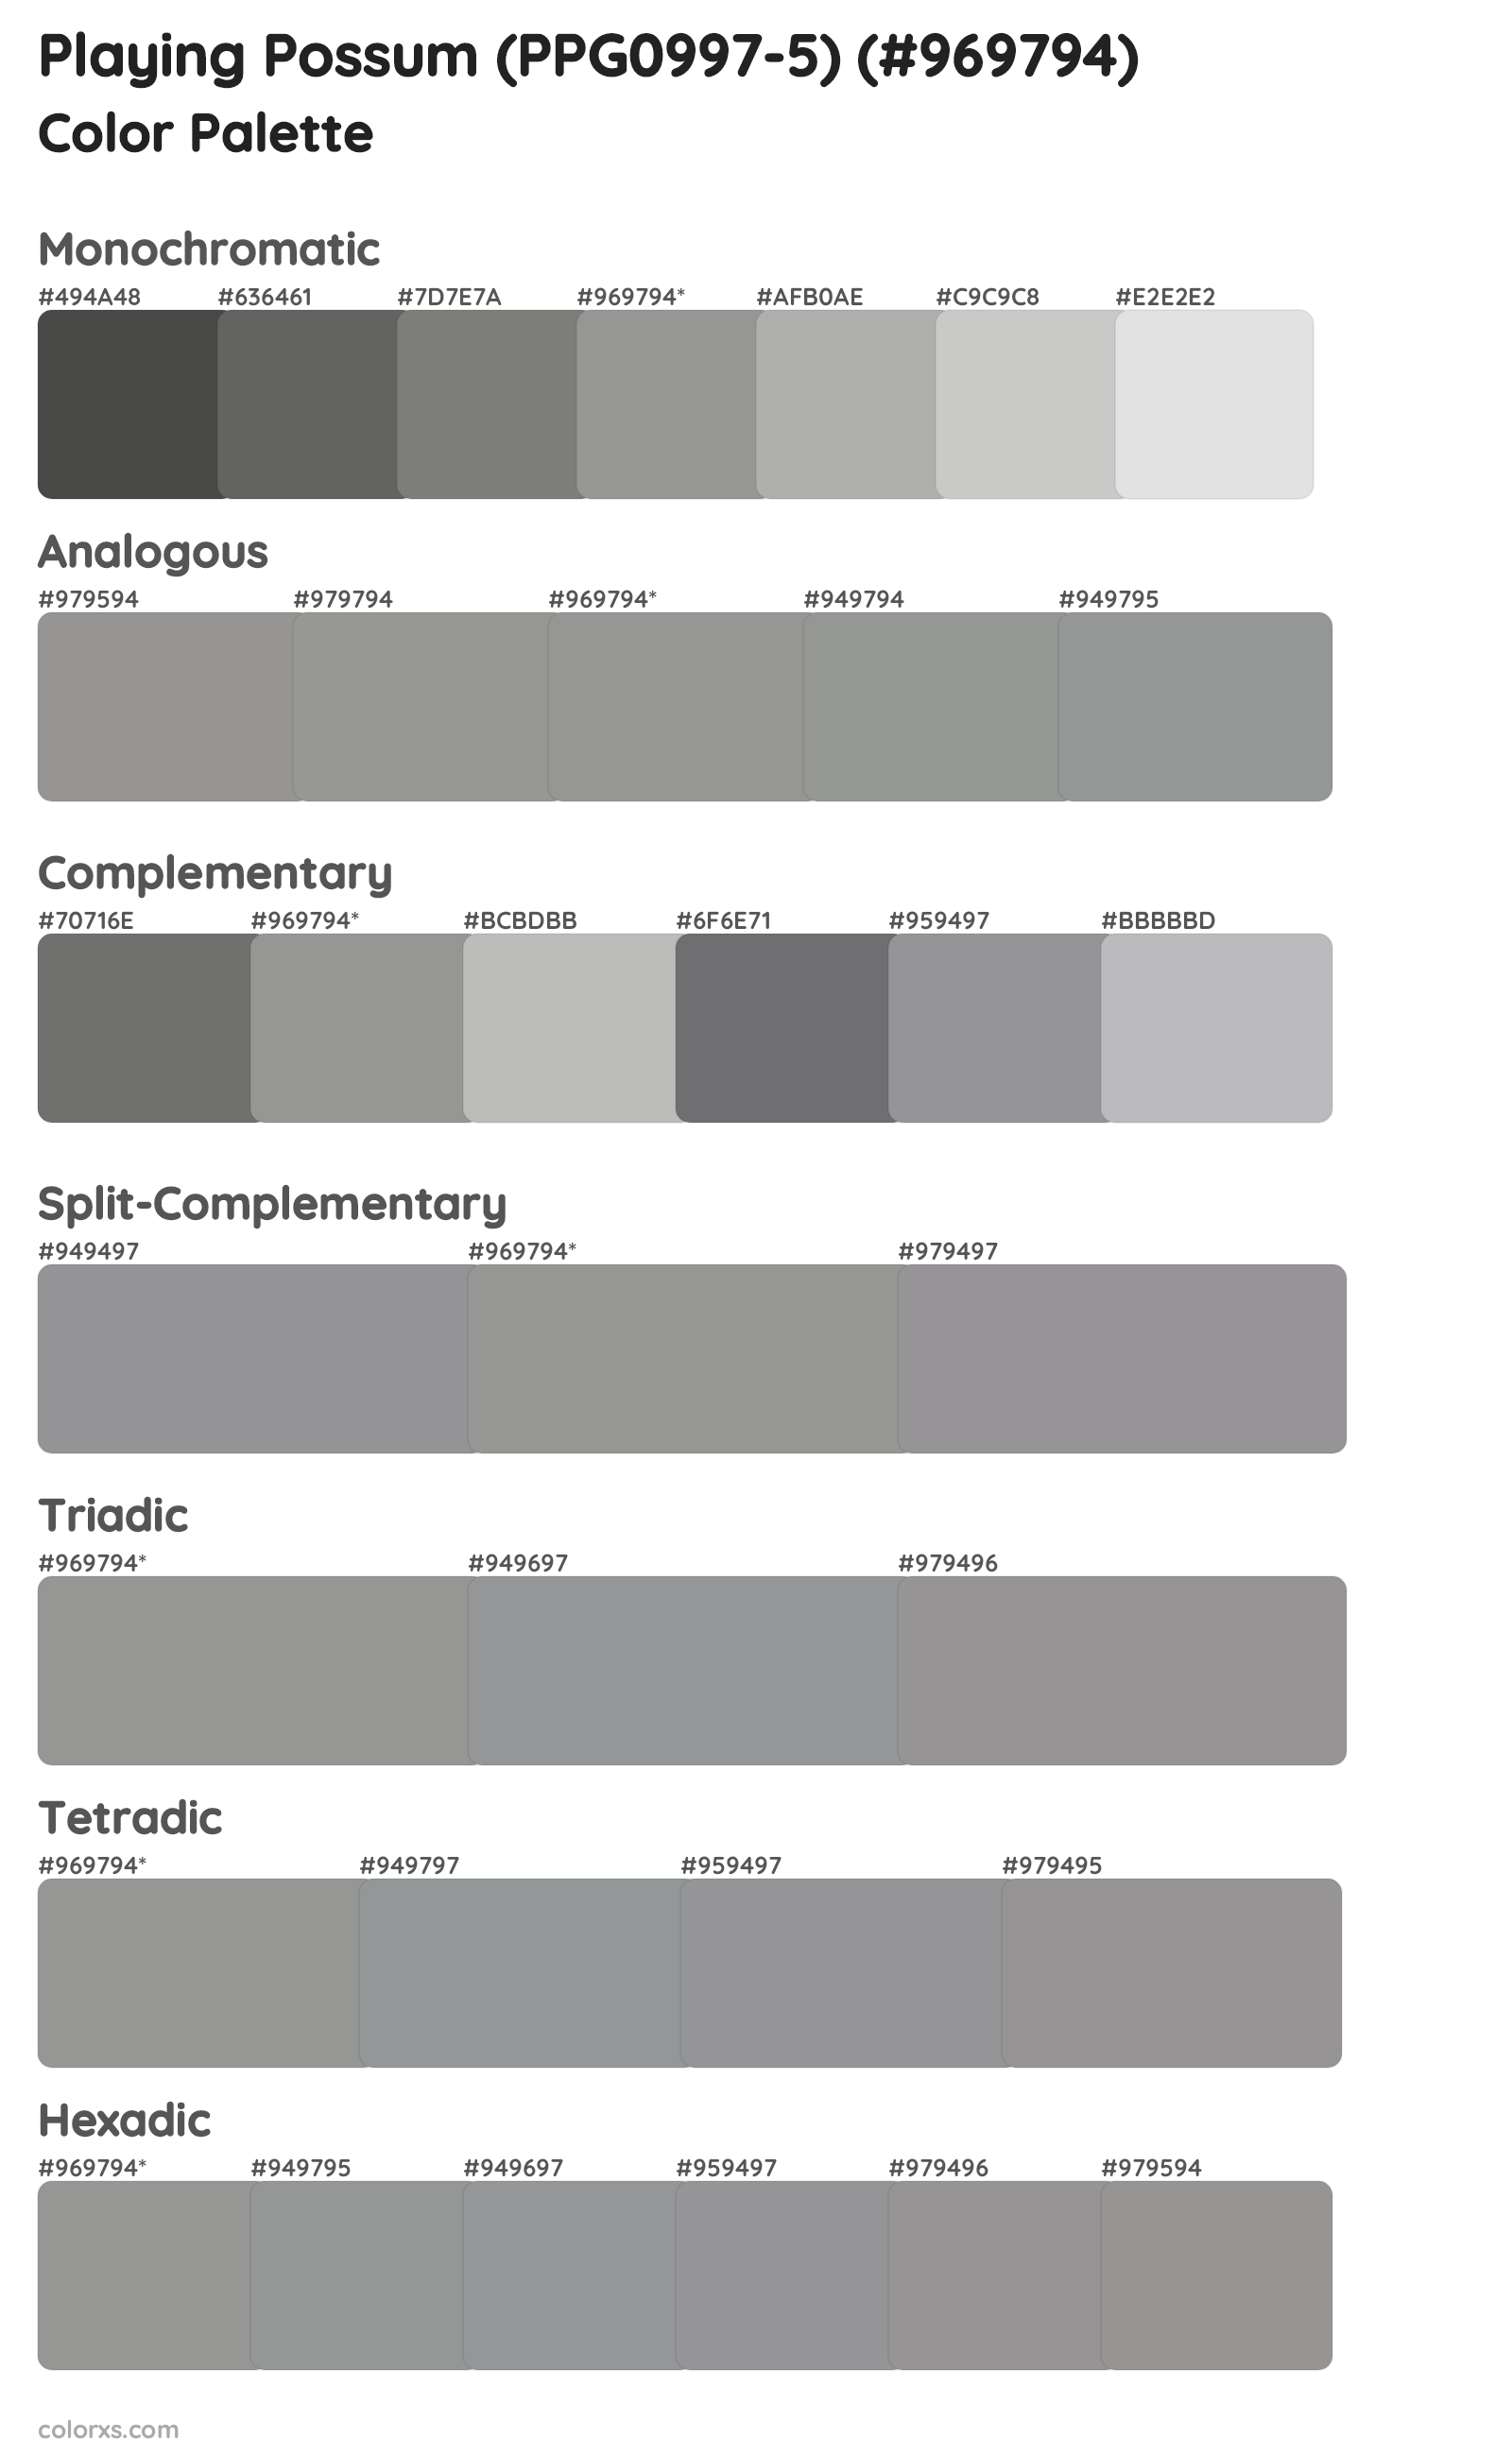 Playing Possum (PPG0997-5) Color Scheme Palettes